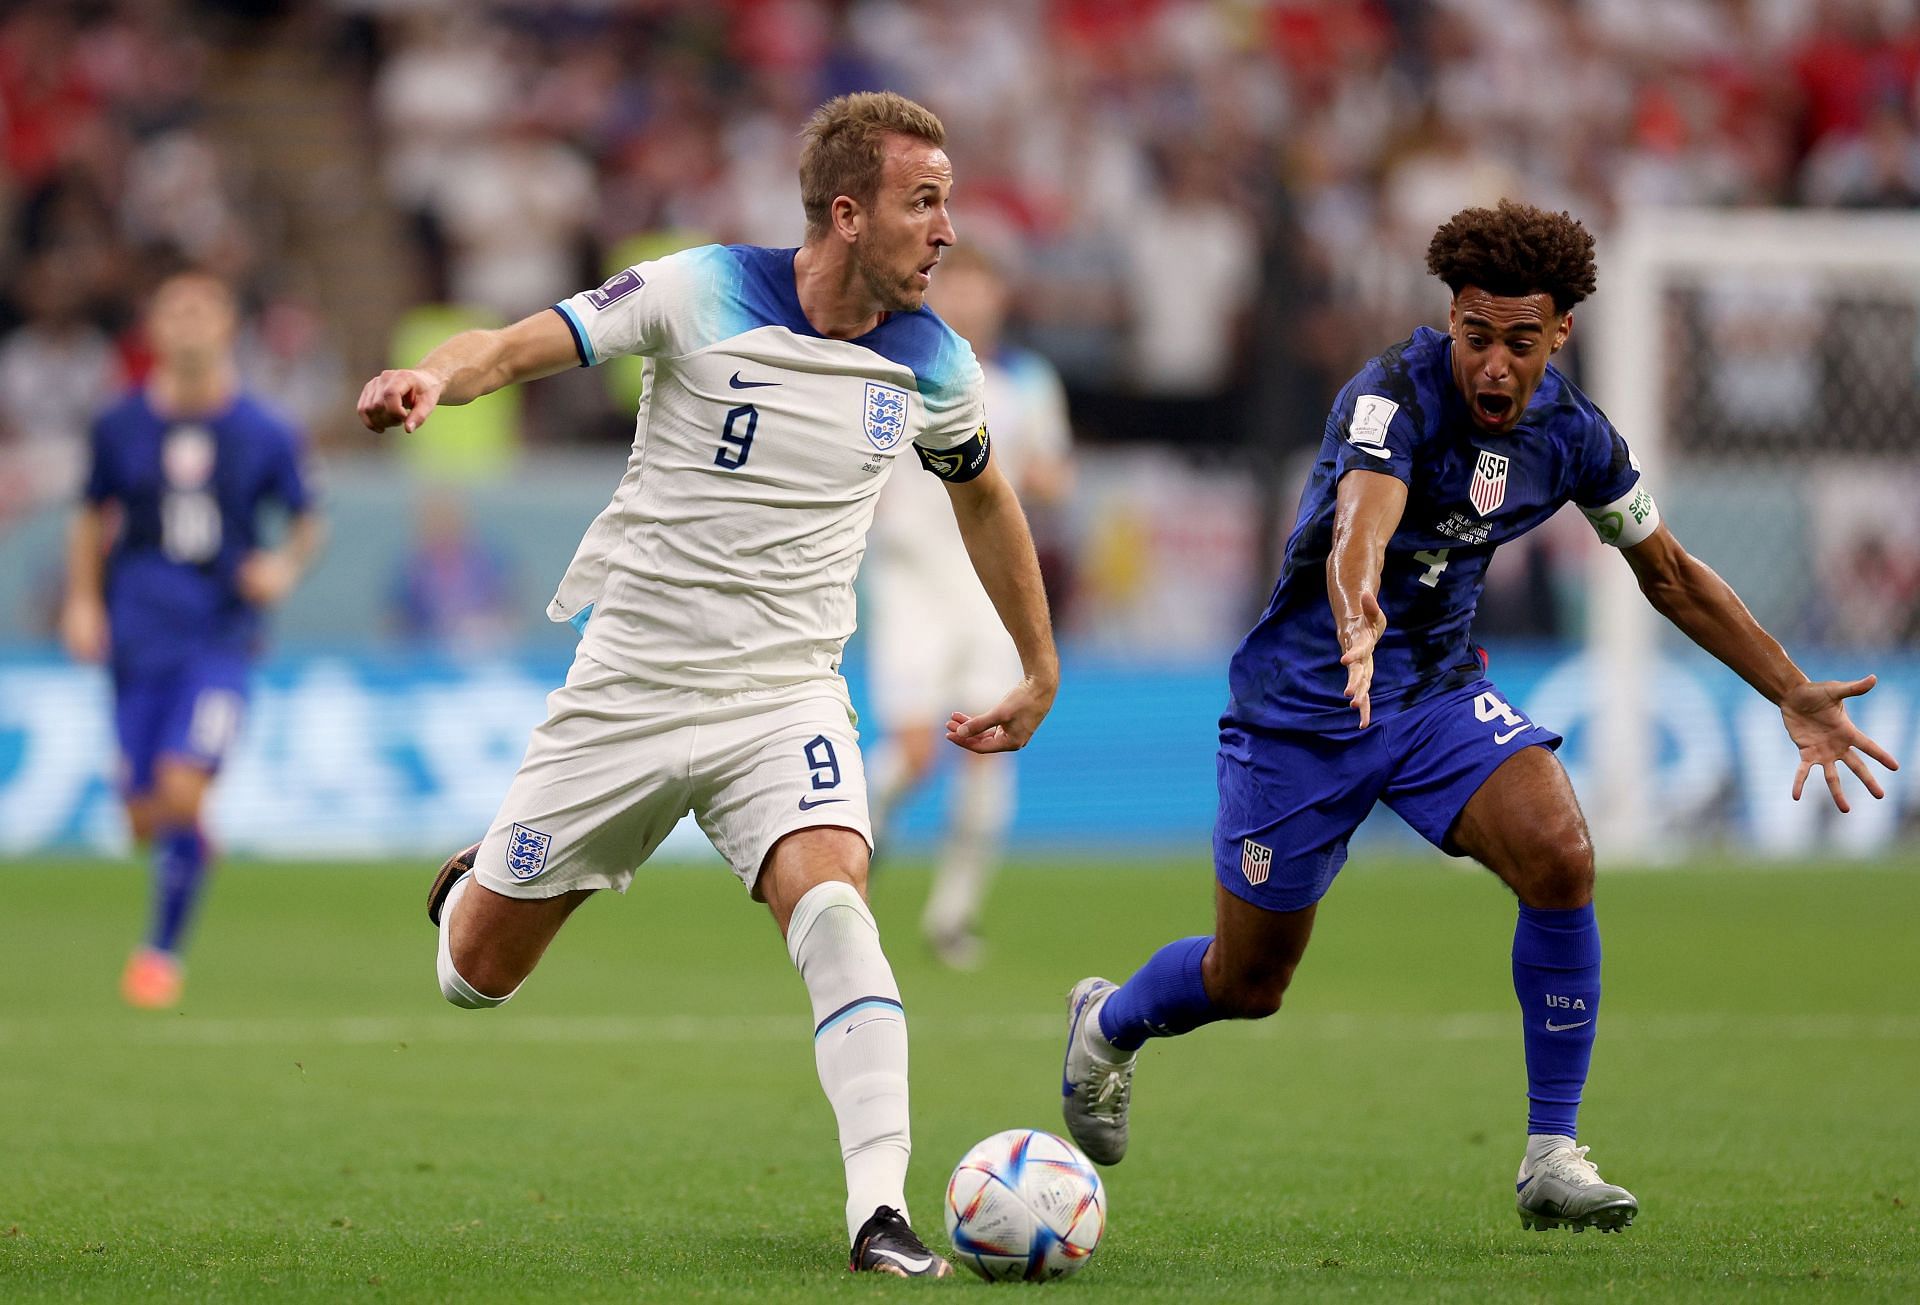 Kane against USA: Group B - FIFA World Cup Qatar 2022